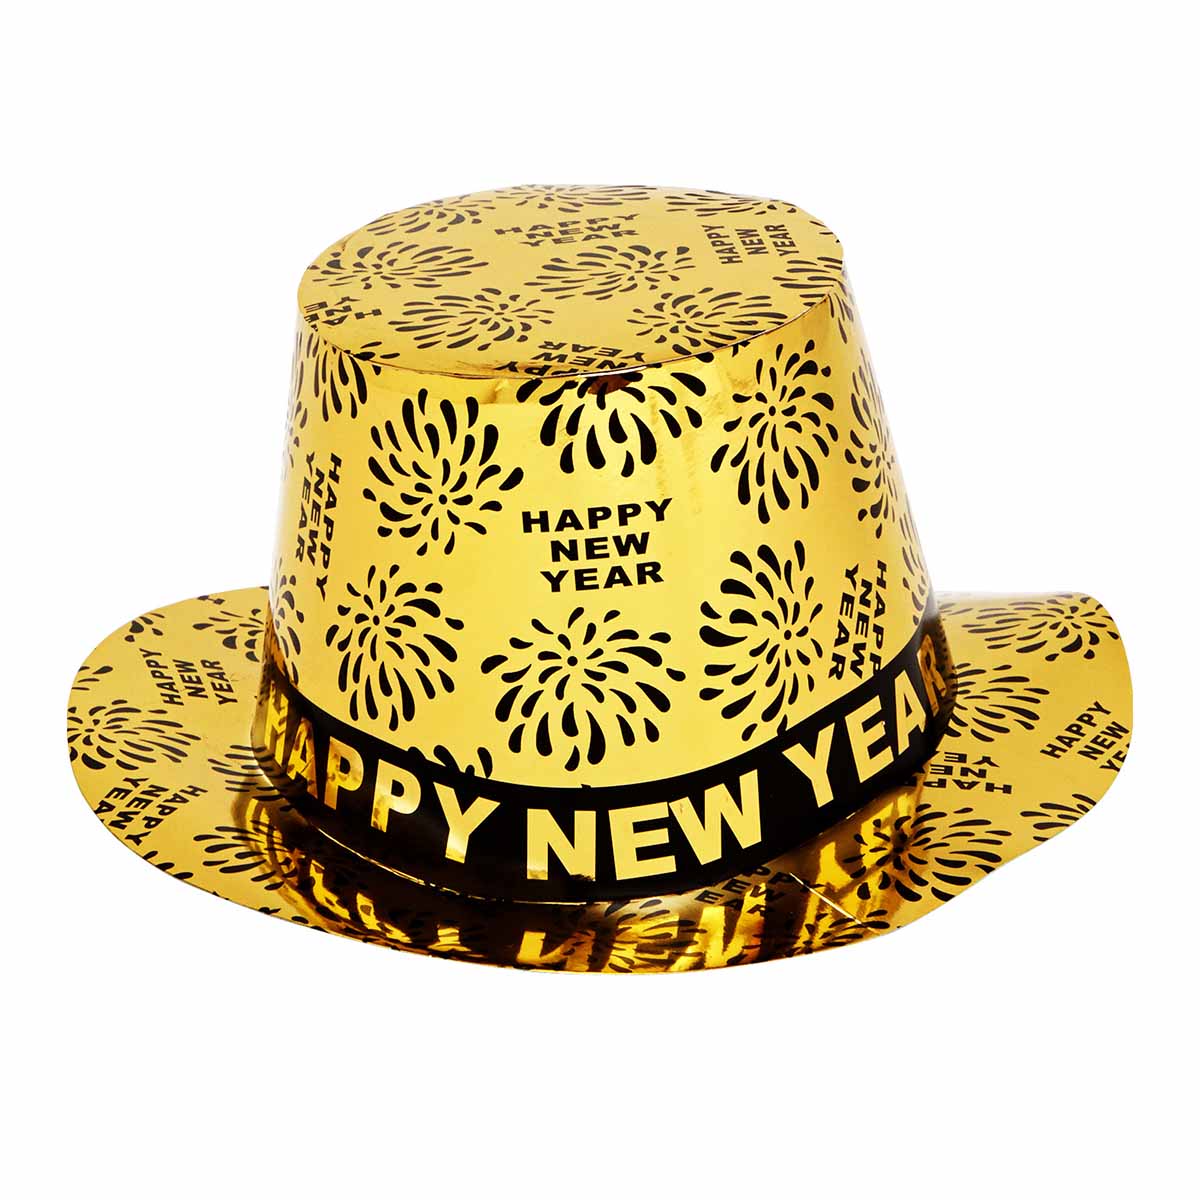 Pappershatt guld happy new year